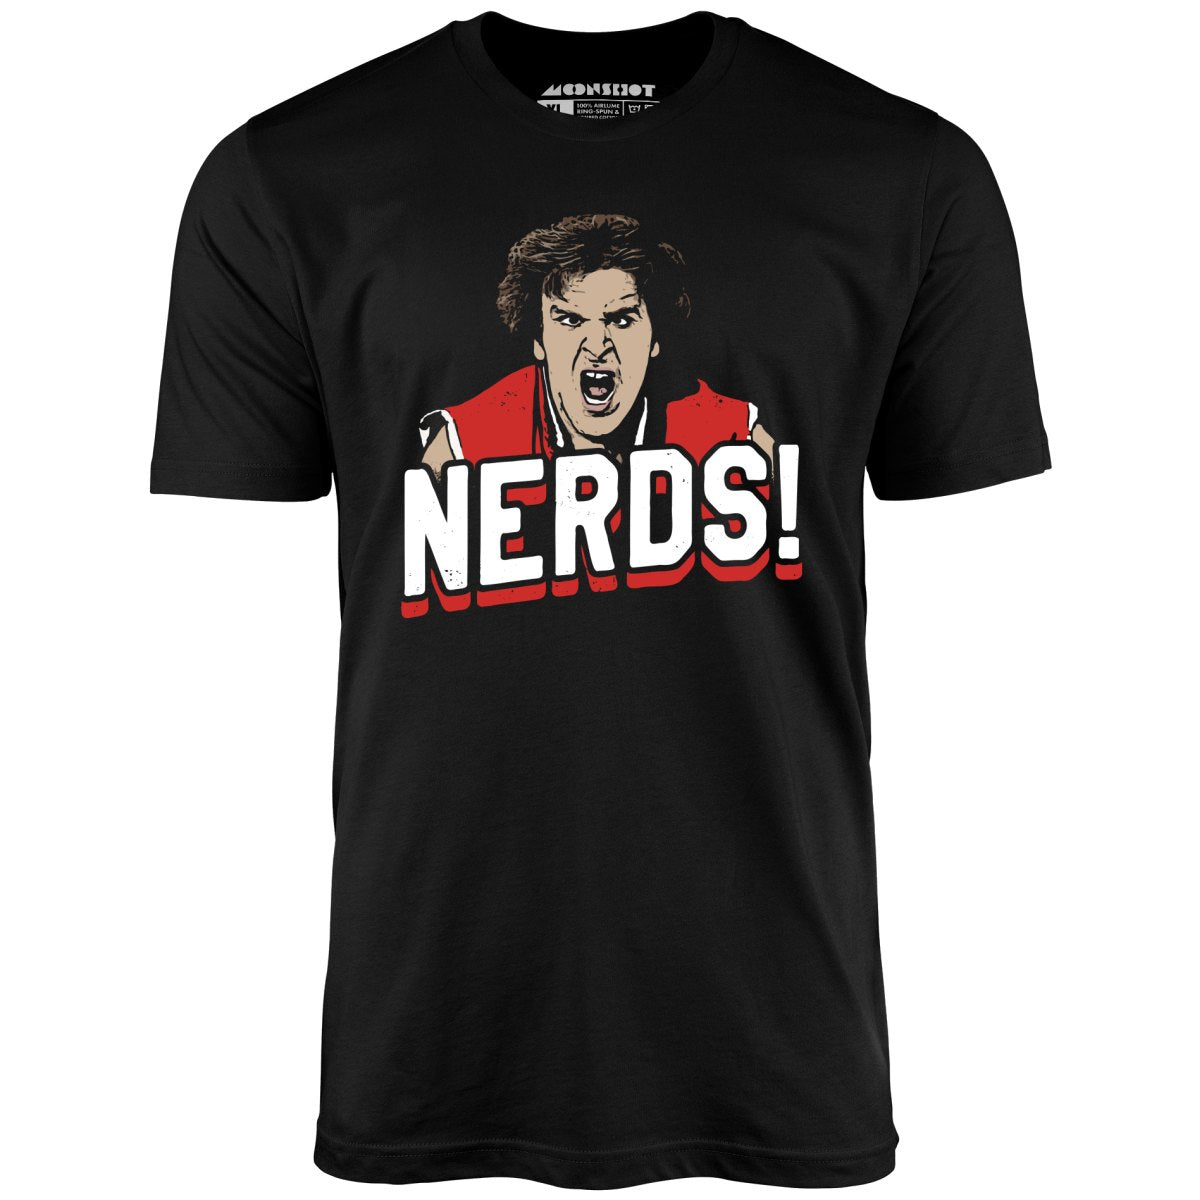 Nerds! - Unisex T-Shirt